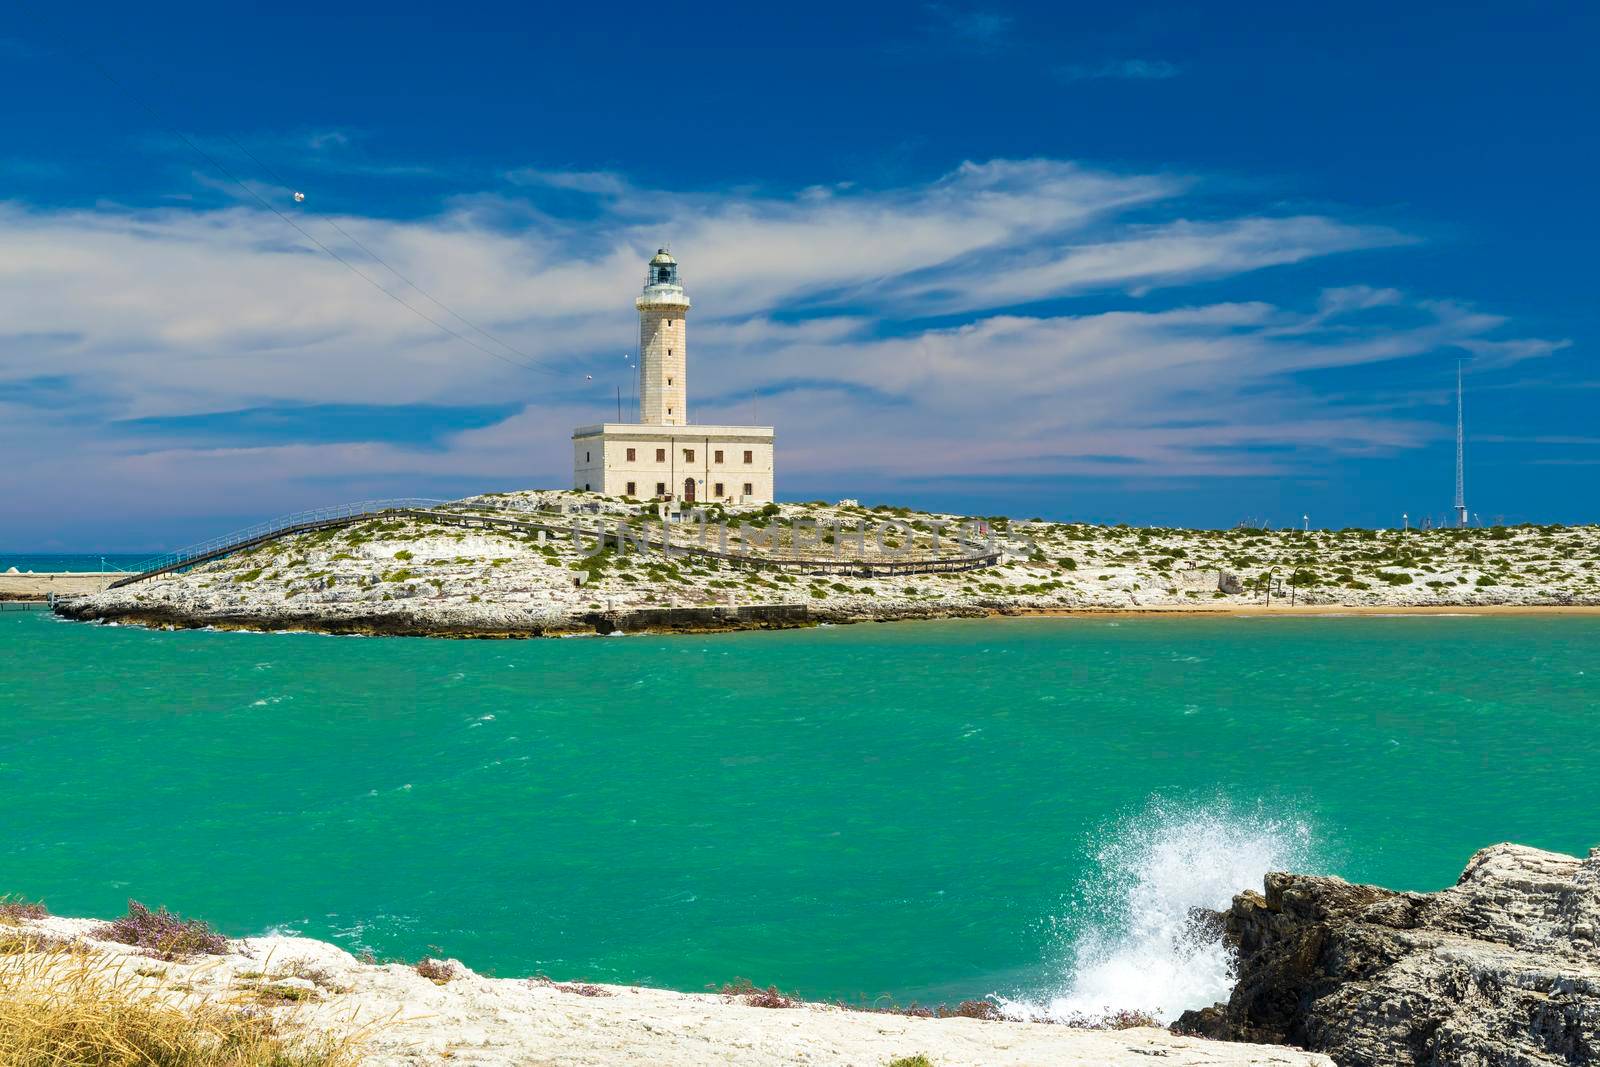 Lighthouse in Vieste, Apulia region, Italy by phbcz